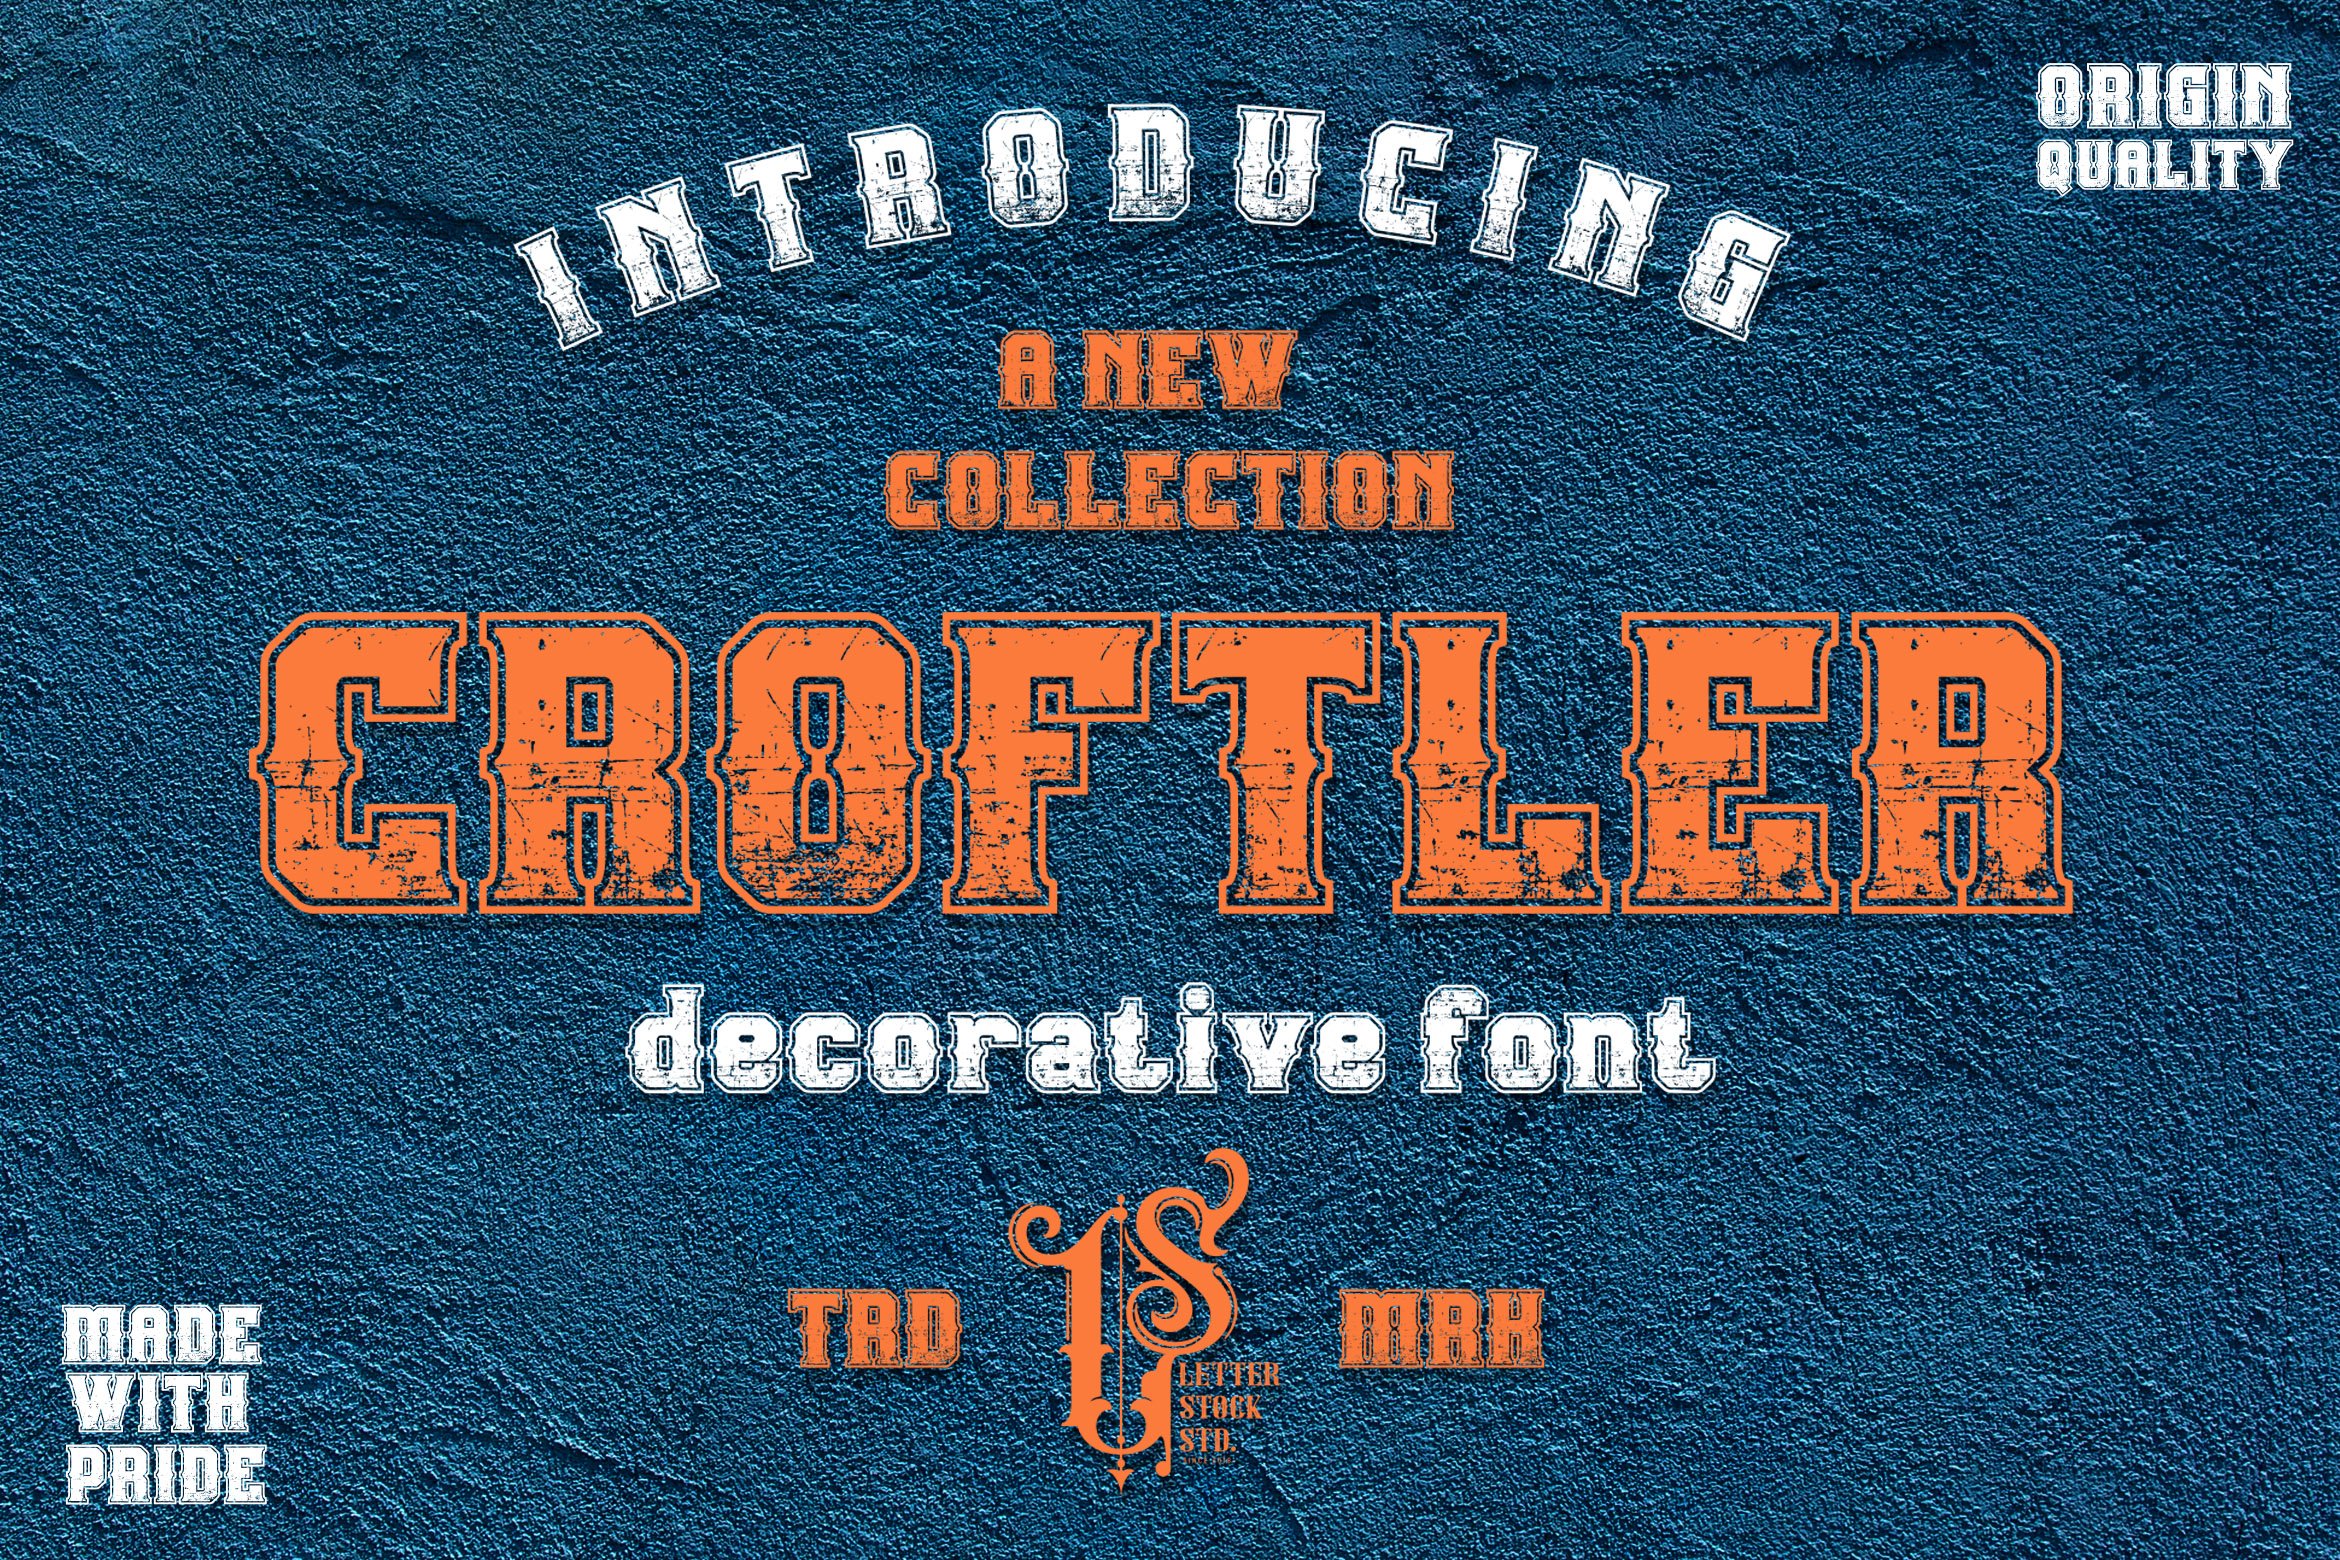 Croftler – Retro Rough Font cover image.